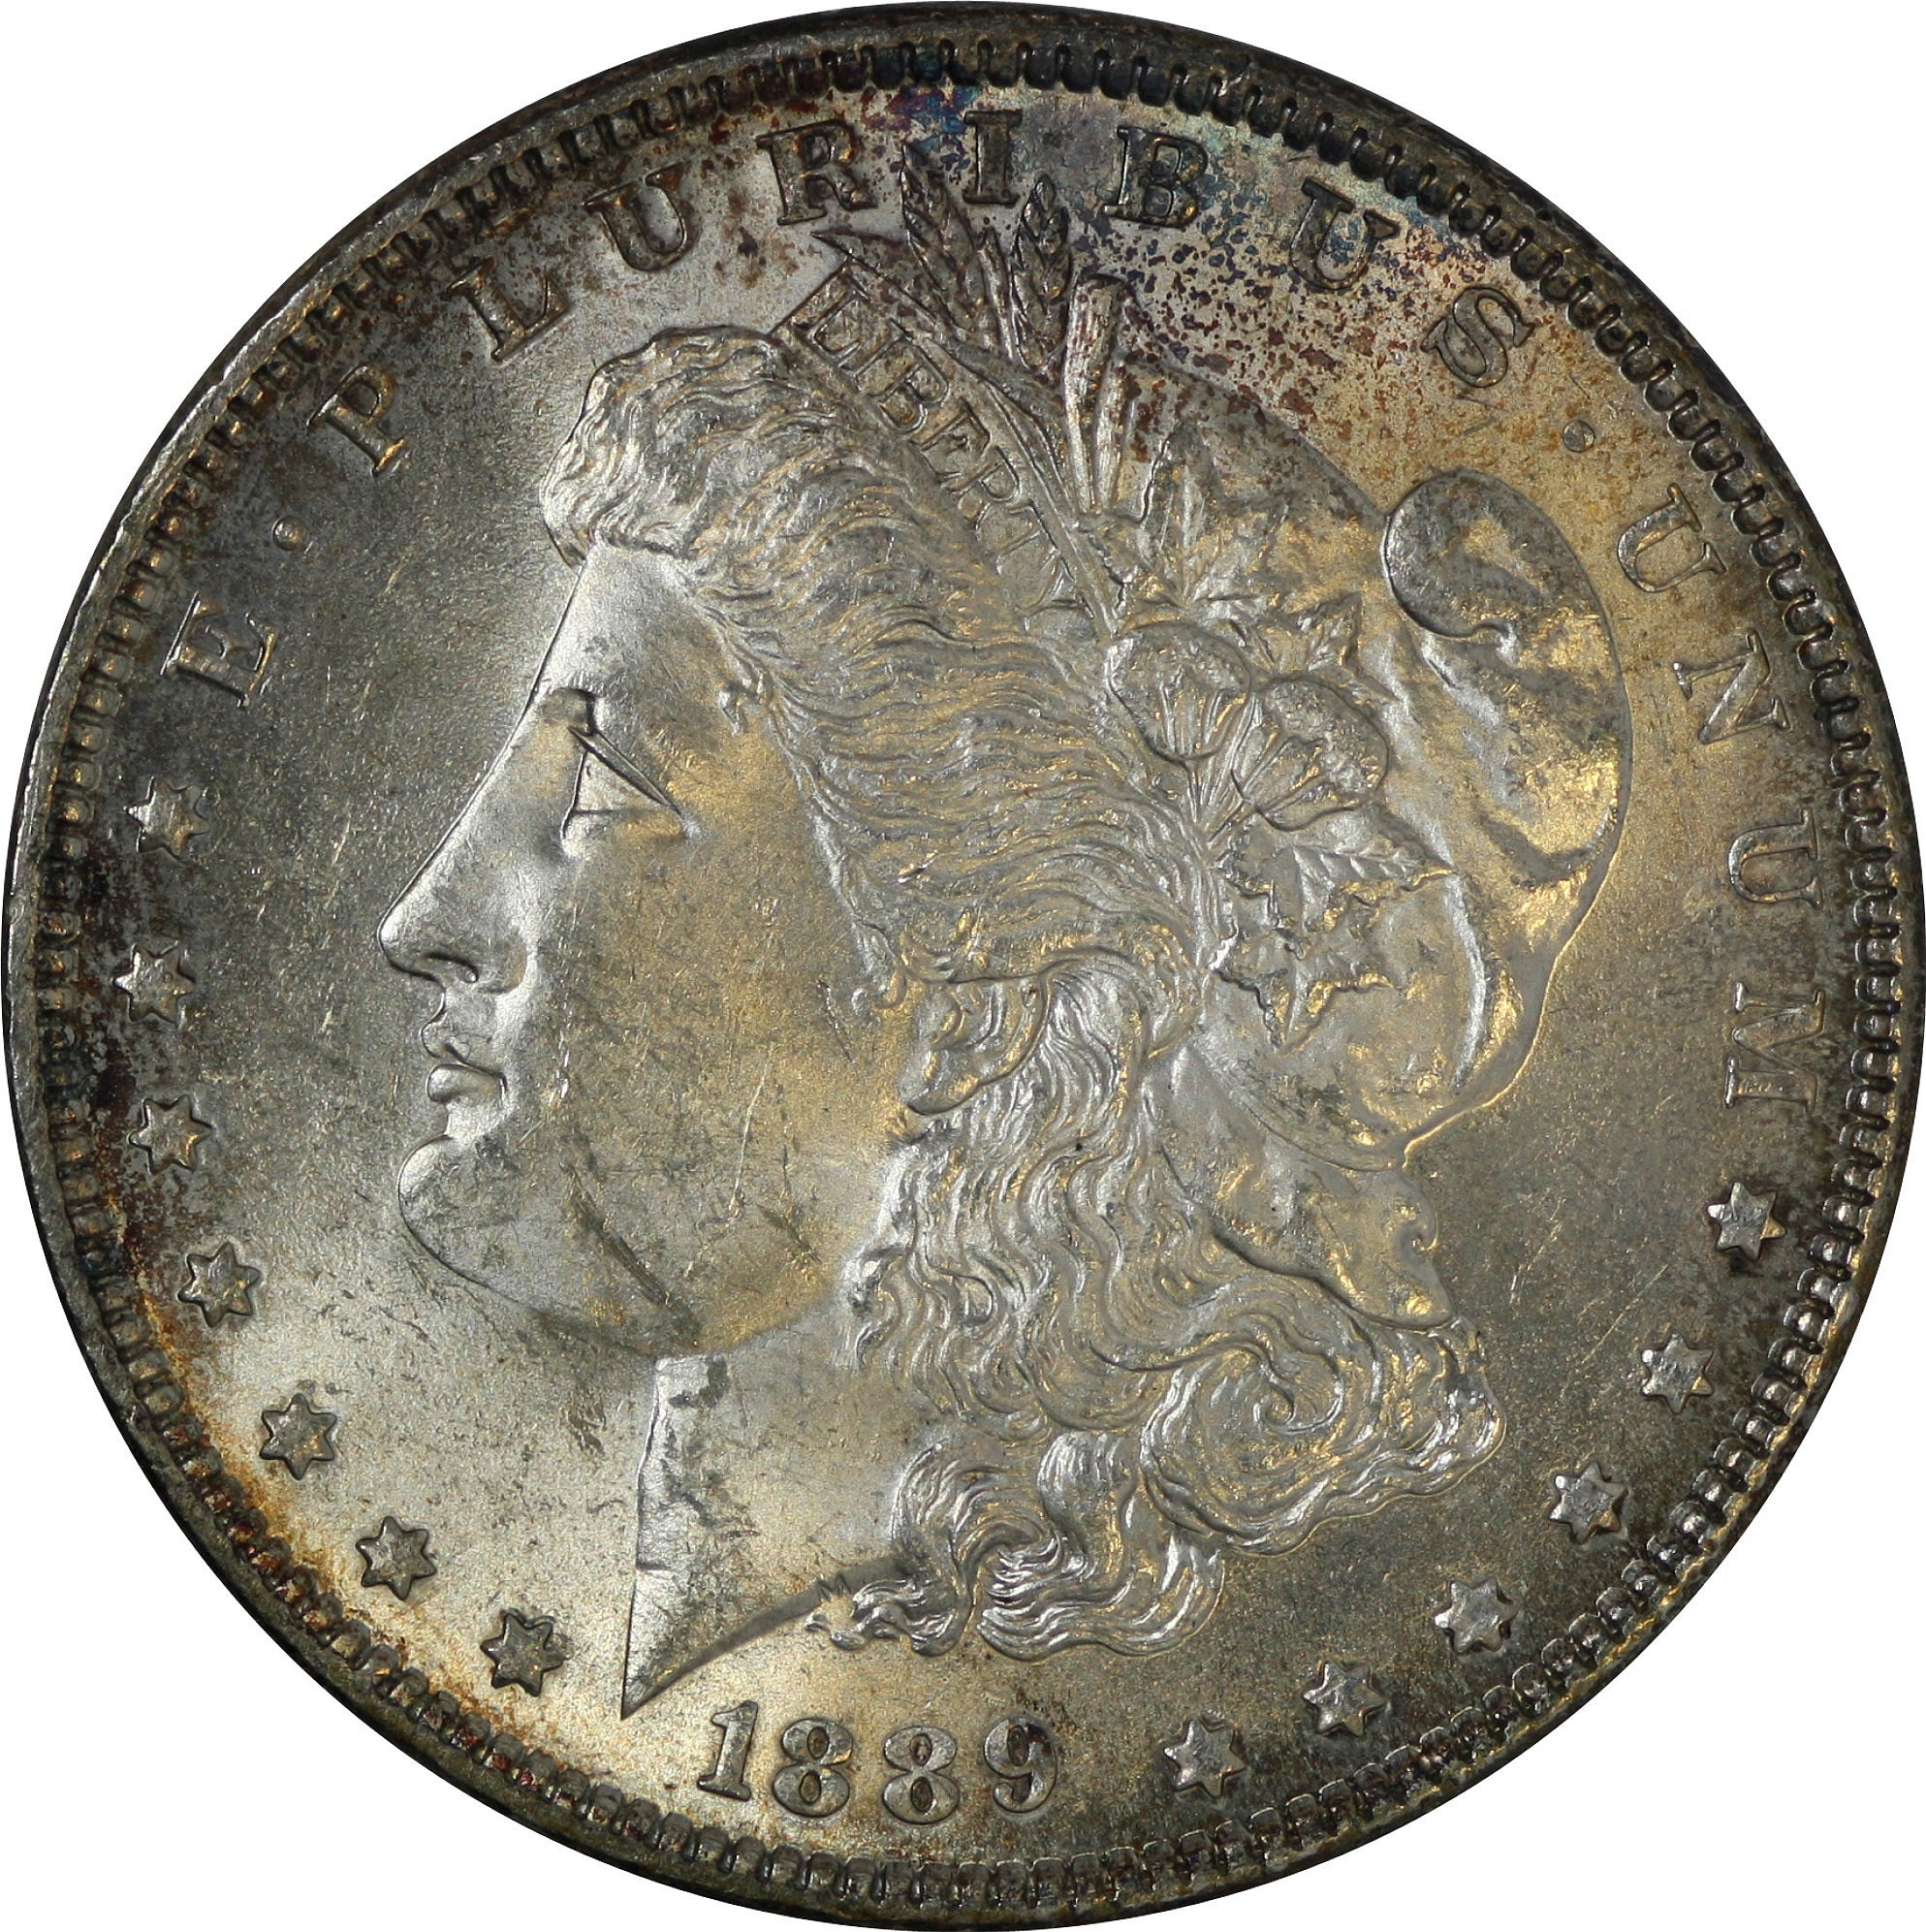 File:1889-p-morgan-dollar-obverse.jpg - Wikimedia Commons